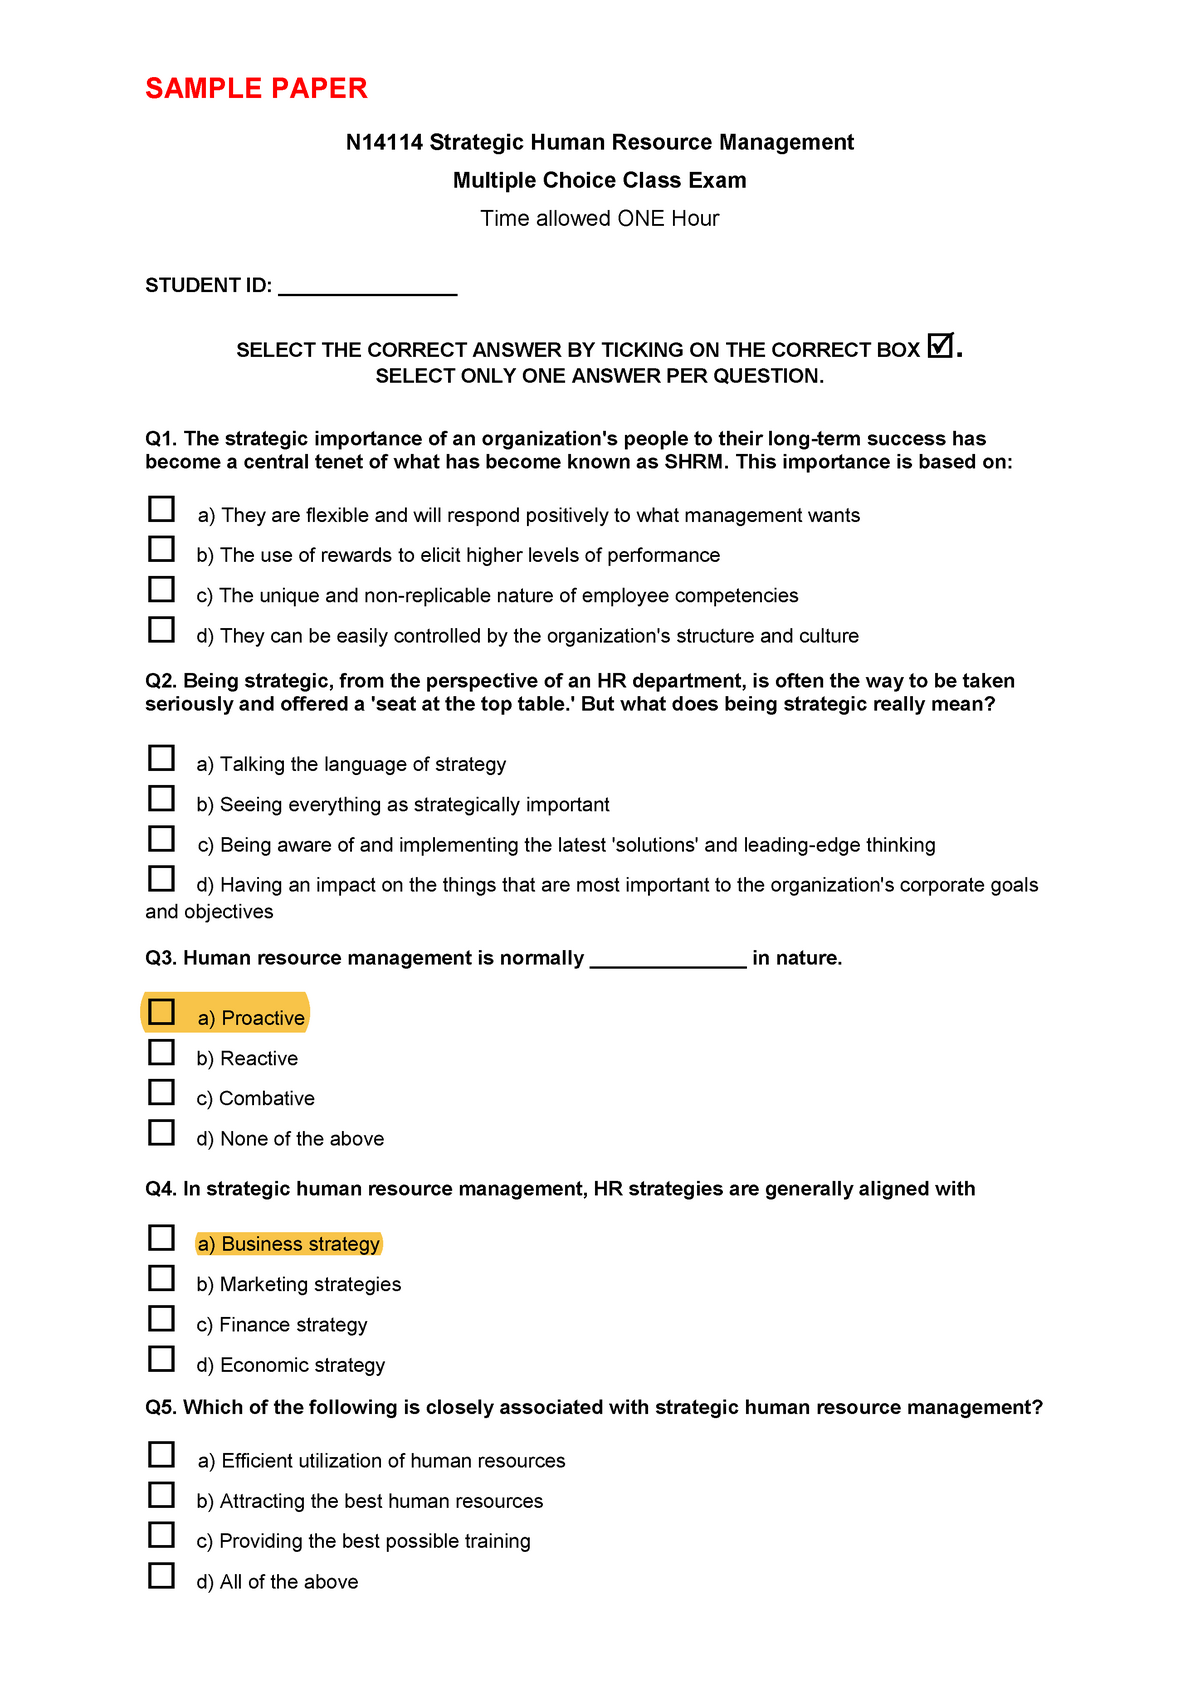 MCQ Sample paper SHRM class exam SAMPLE PAPER N14114 Strategic Human